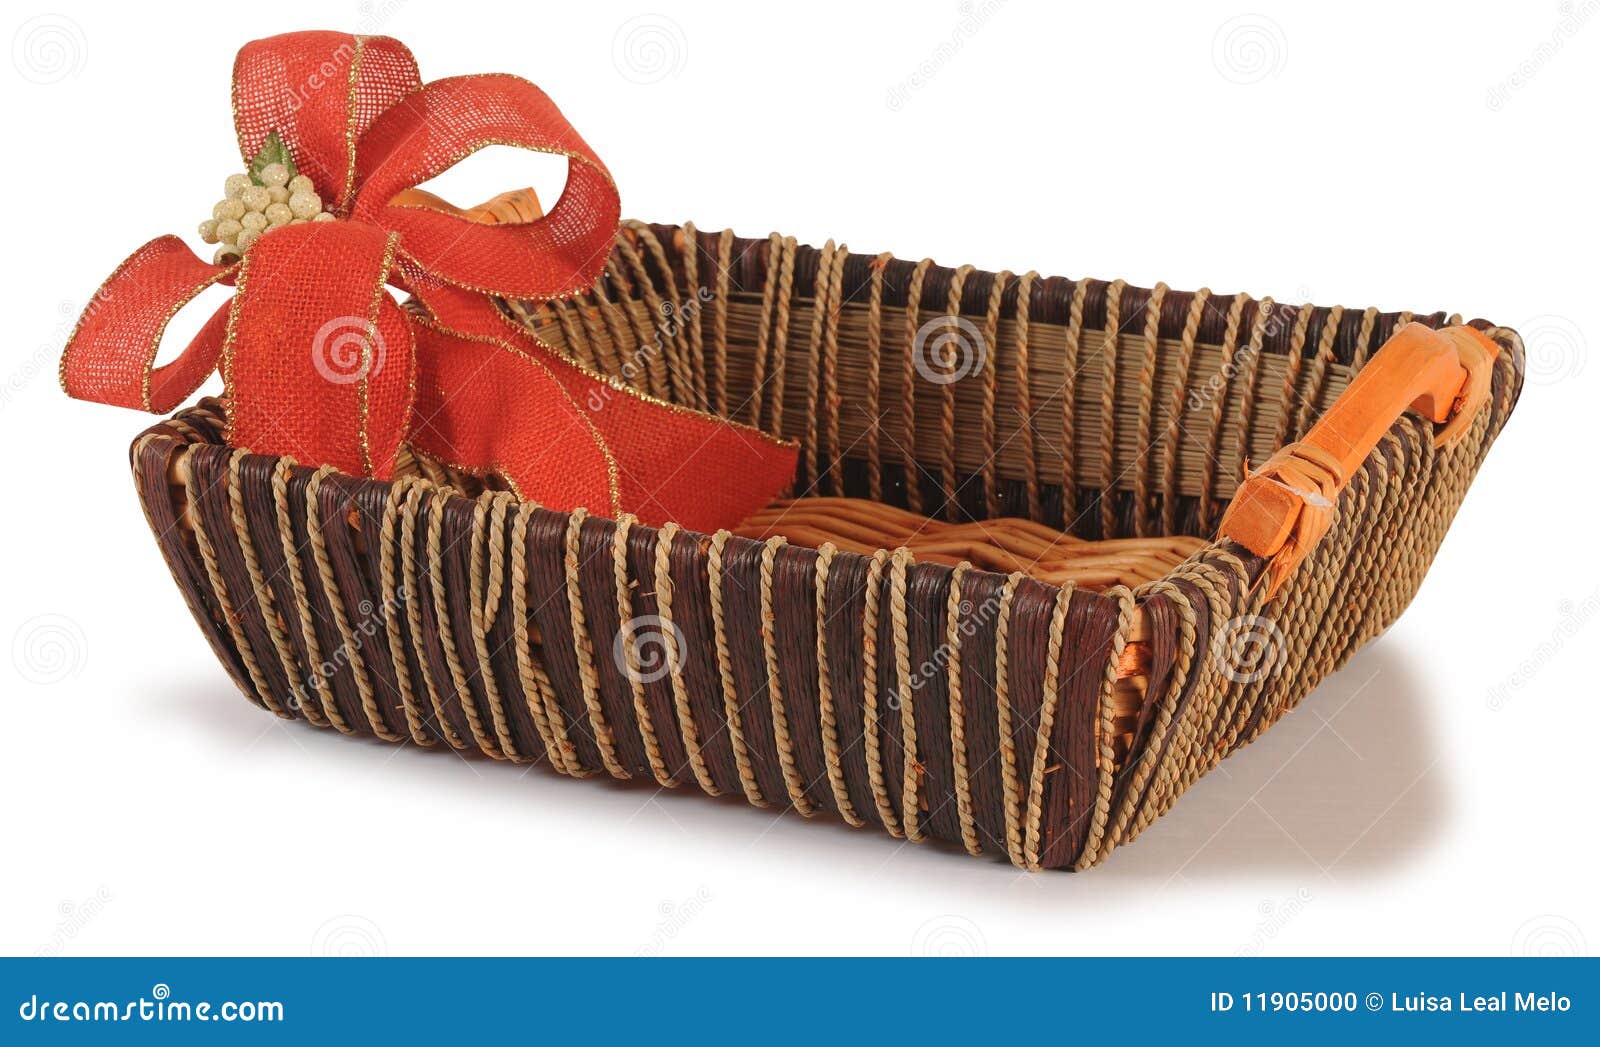 Aggregate more than 102 empty gift hamper baskets super hot